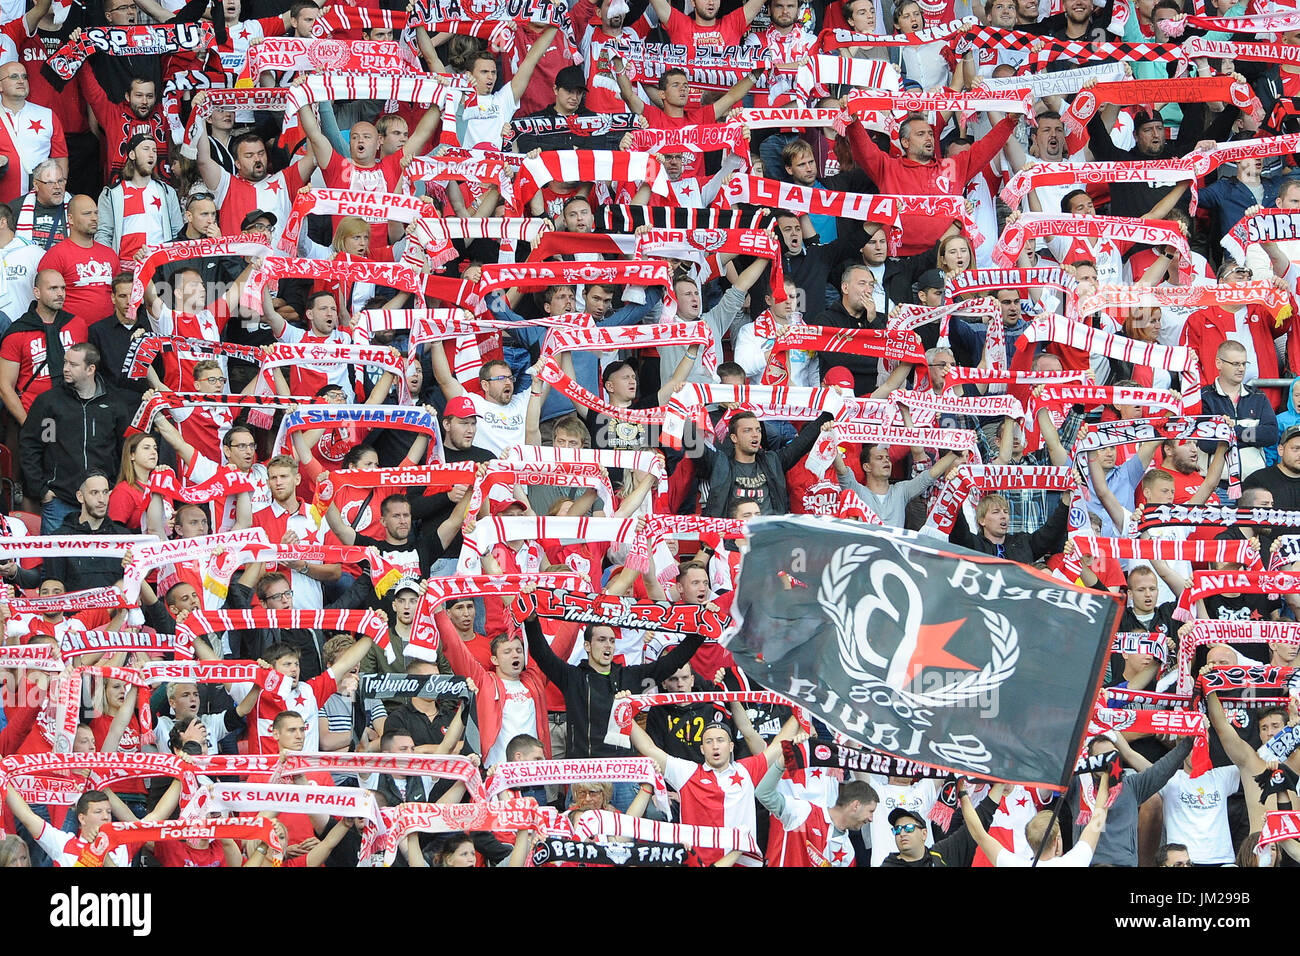 File:SK Slavia Praha Club Museum 09.jpg - Wikimedia Commons